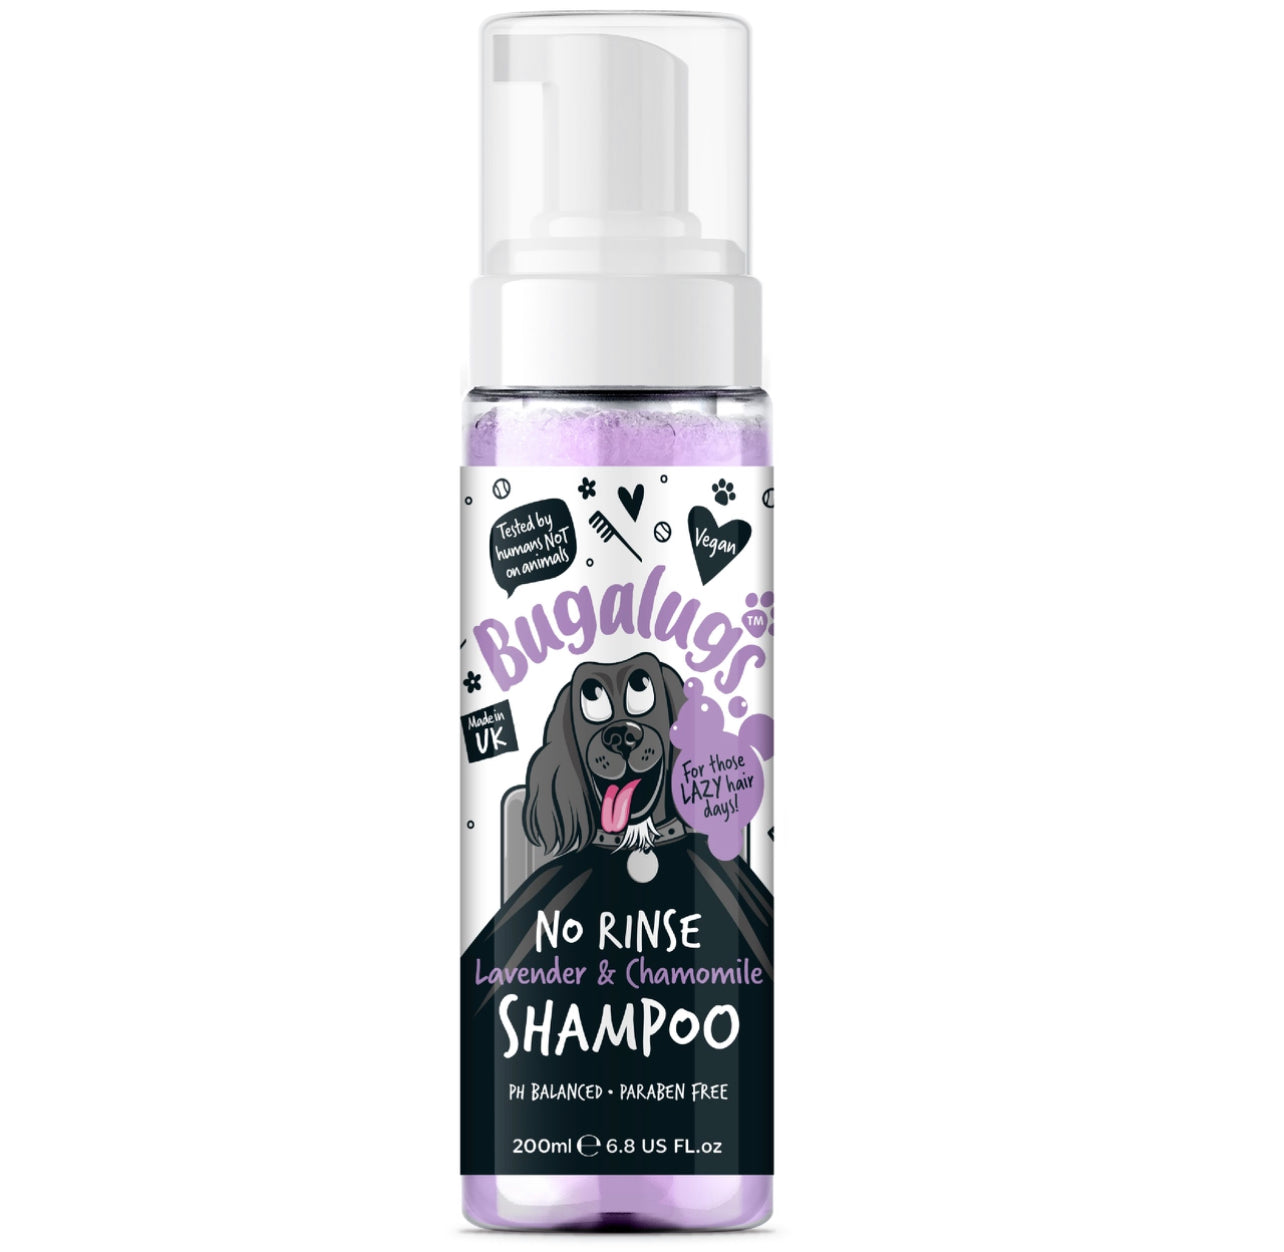 Bugalugs - No Rinse Lavender & Chamomile Shampoo